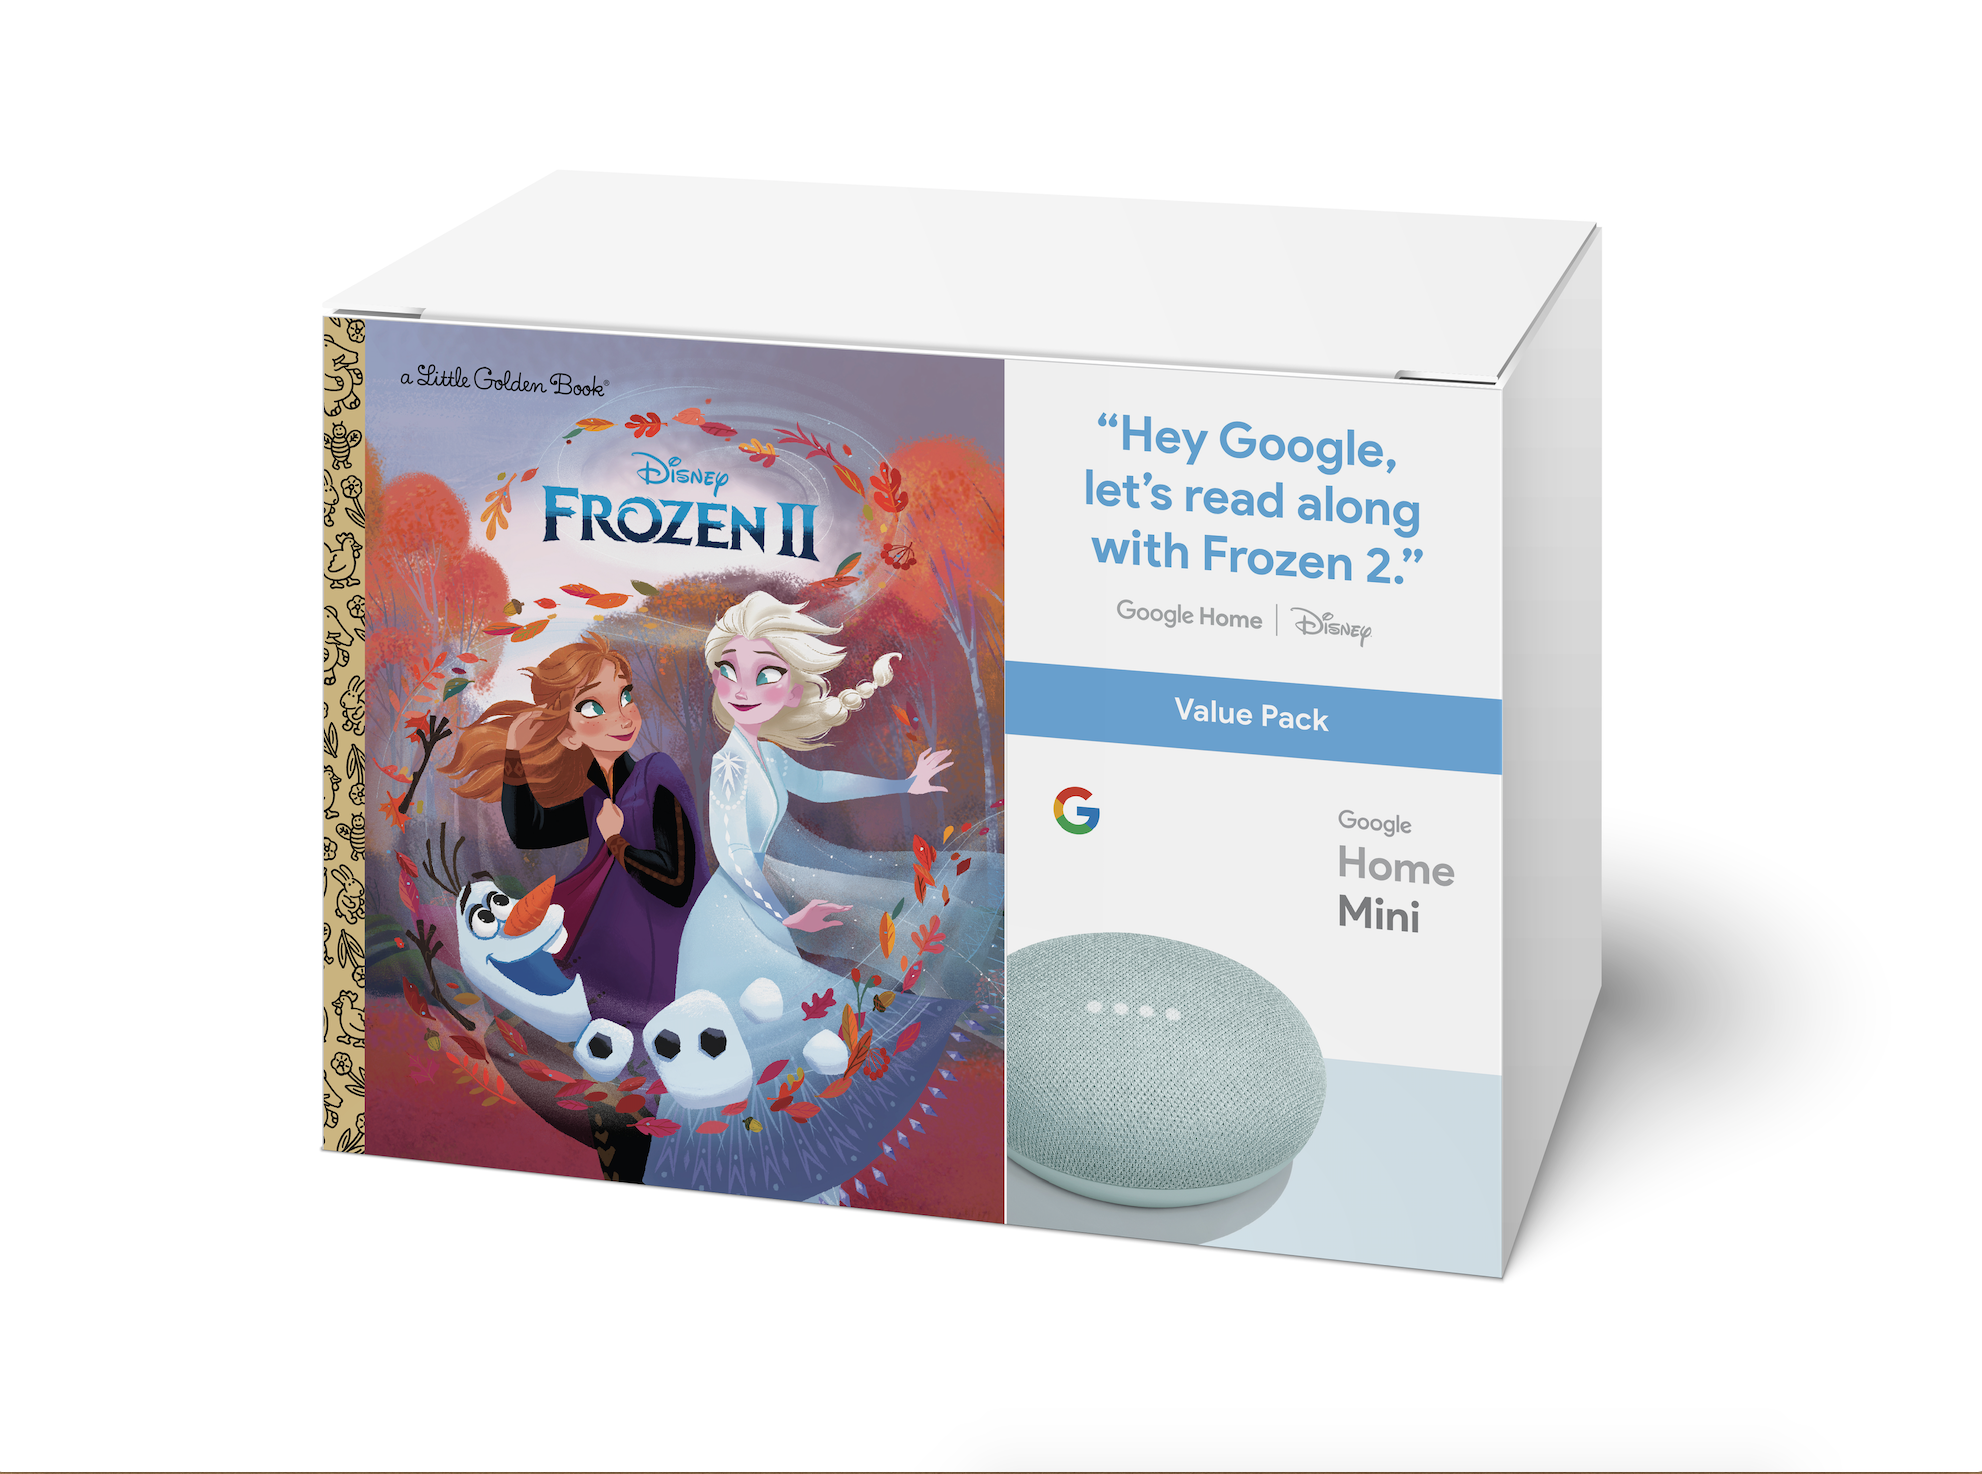 Google Home Mini (Aqua) & Frozen II Book Bundle ($5 value) - image 2 of 3